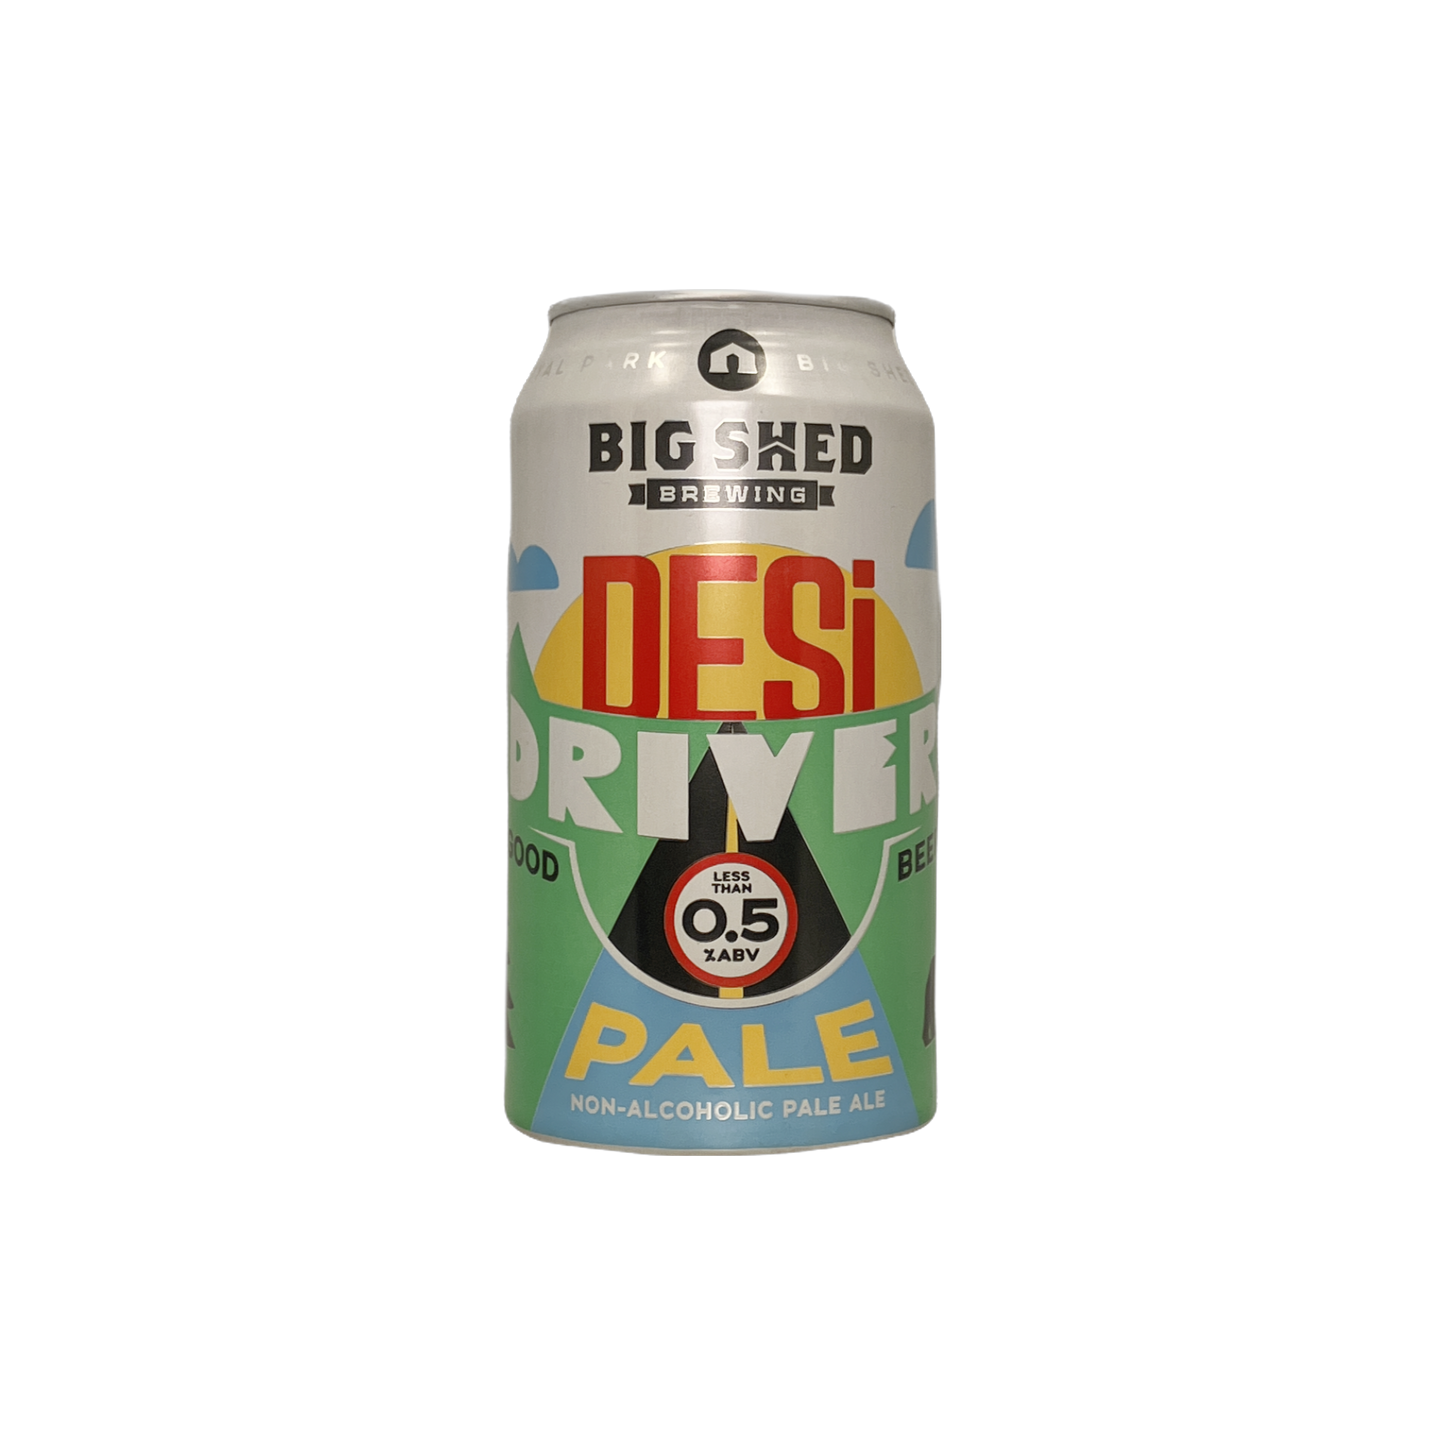 Big Shed Desi Driver 0.5% Pale Ale 375ml